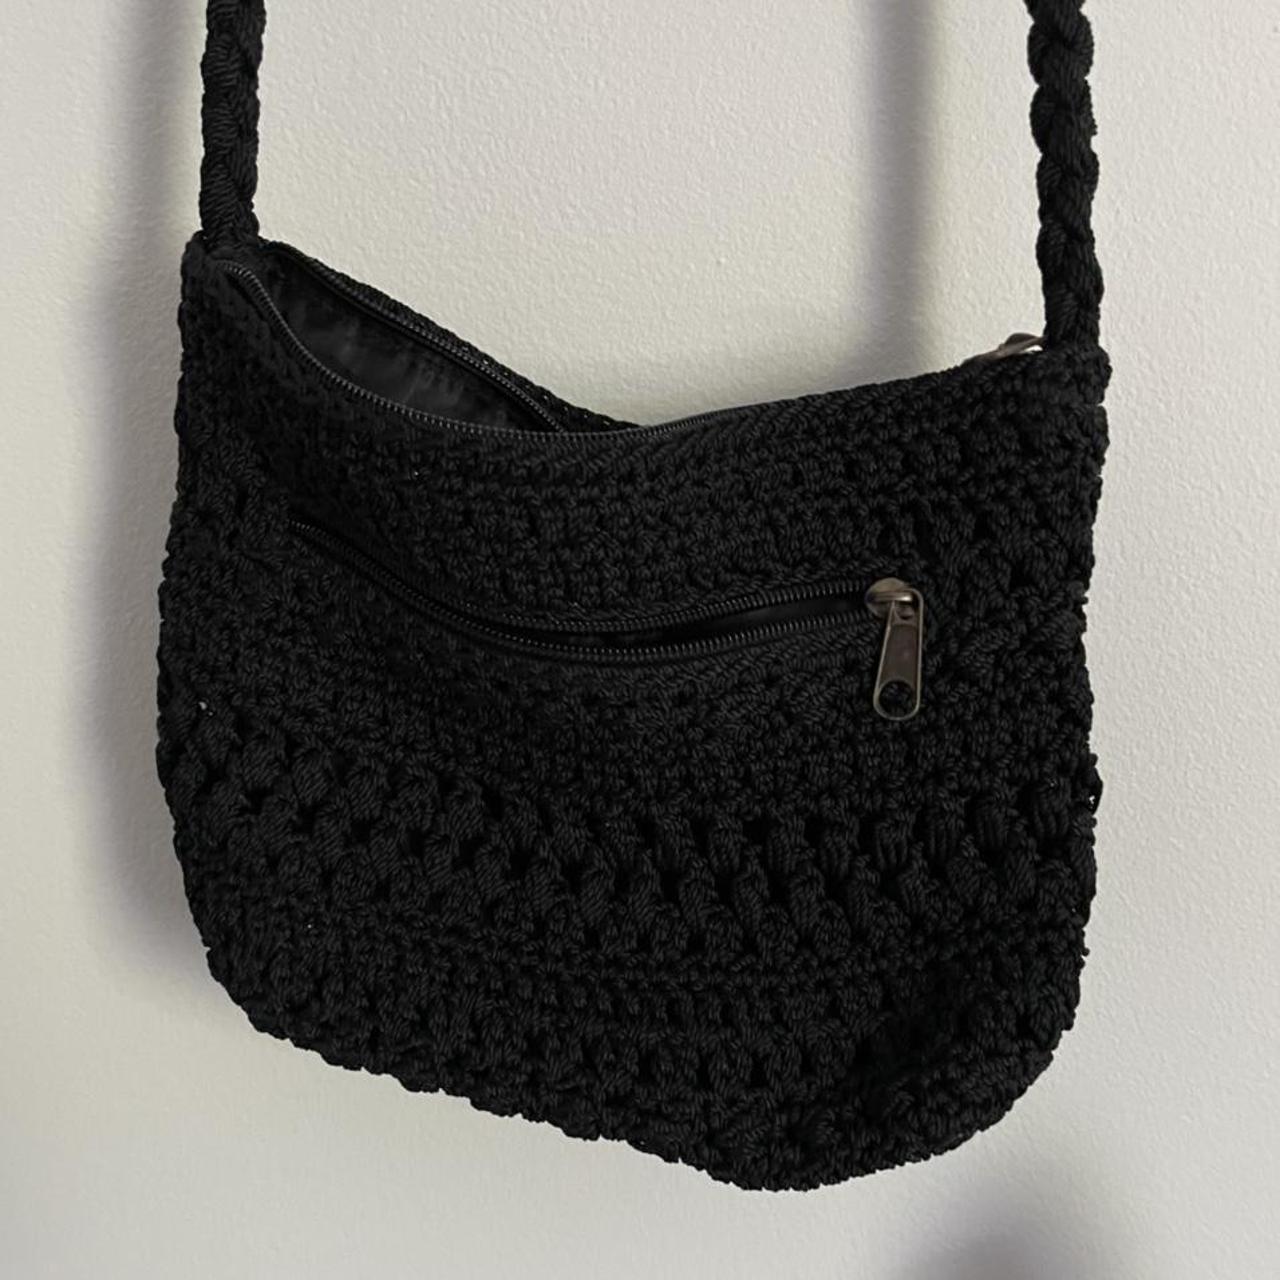 Croft & Barrow Women's Black Bag (2)